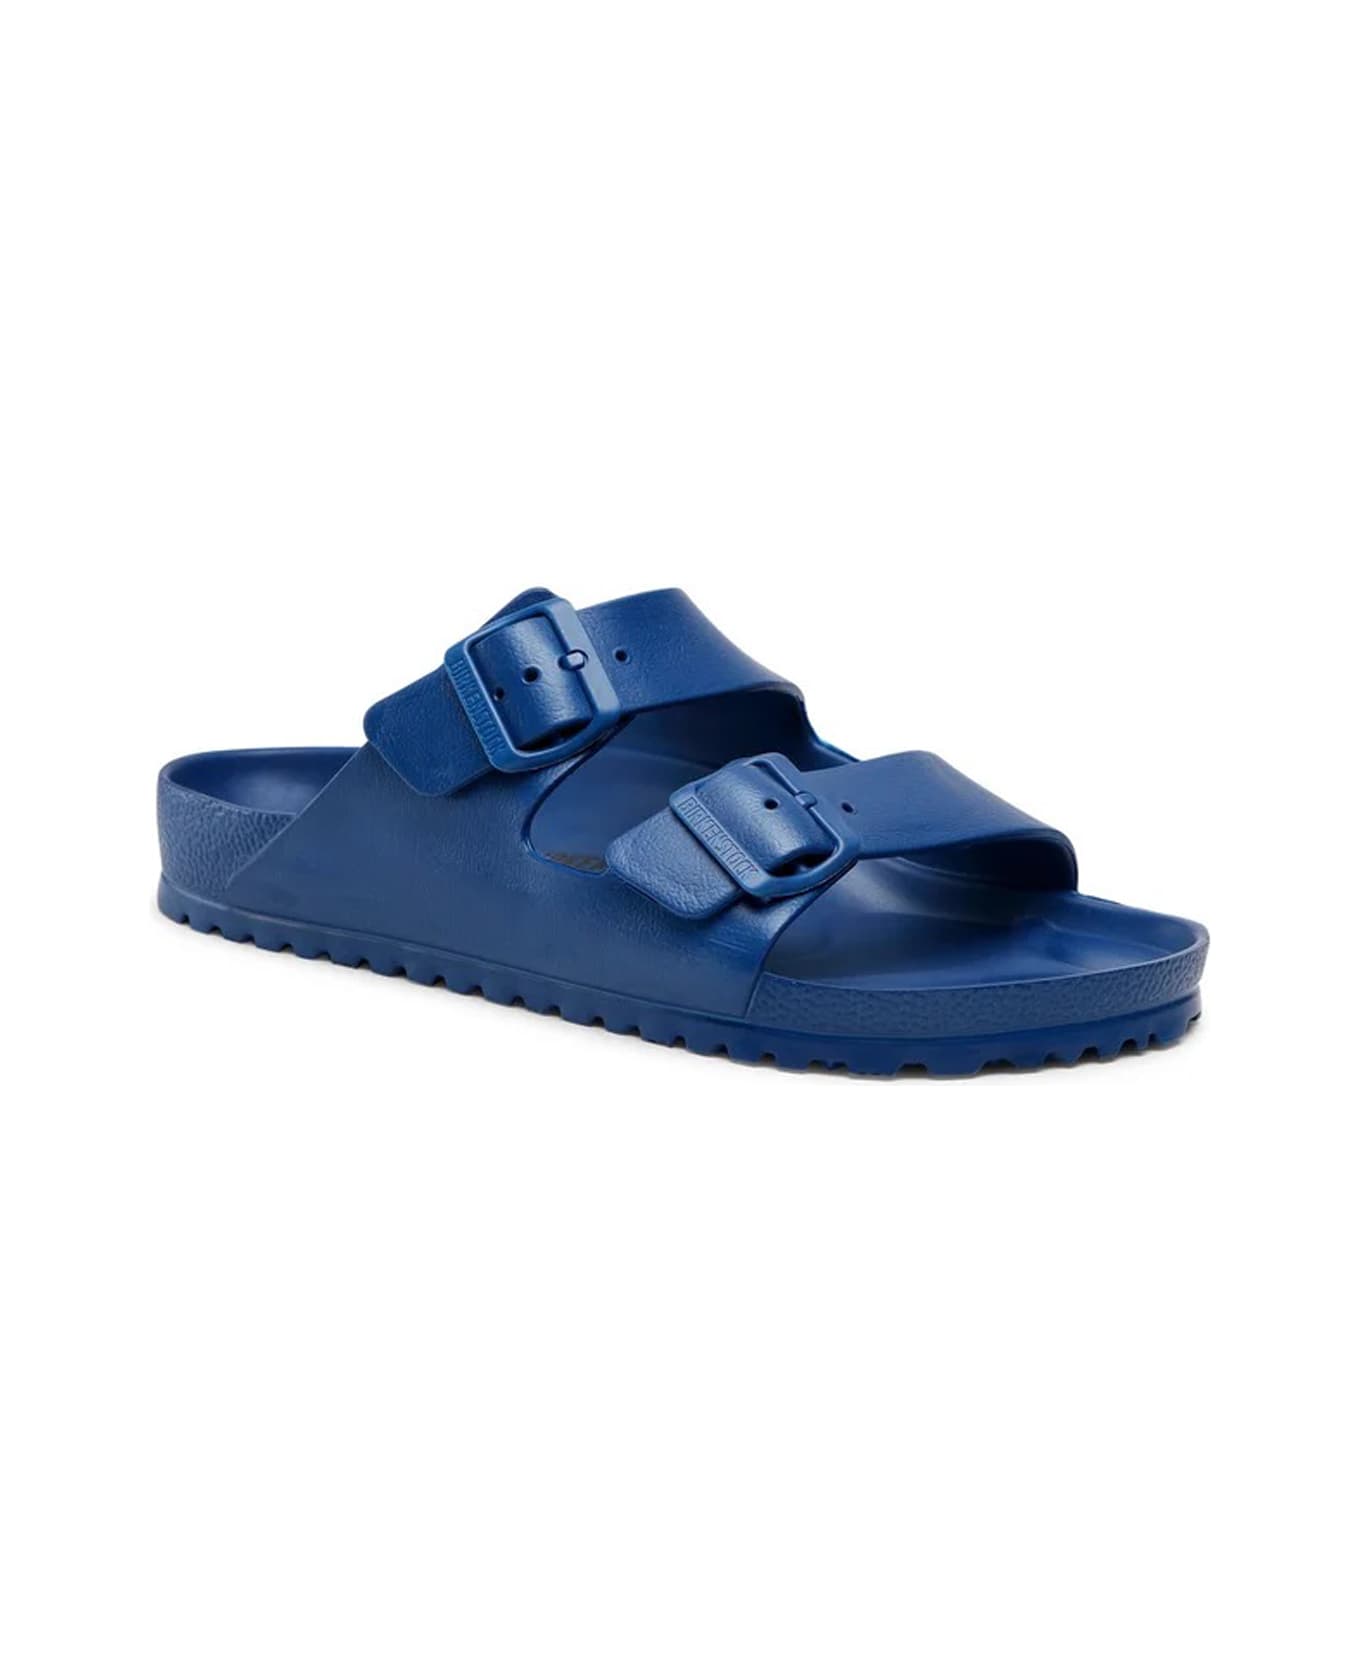 Birkenstock Flat Sandal - Blue その他各種シューズ